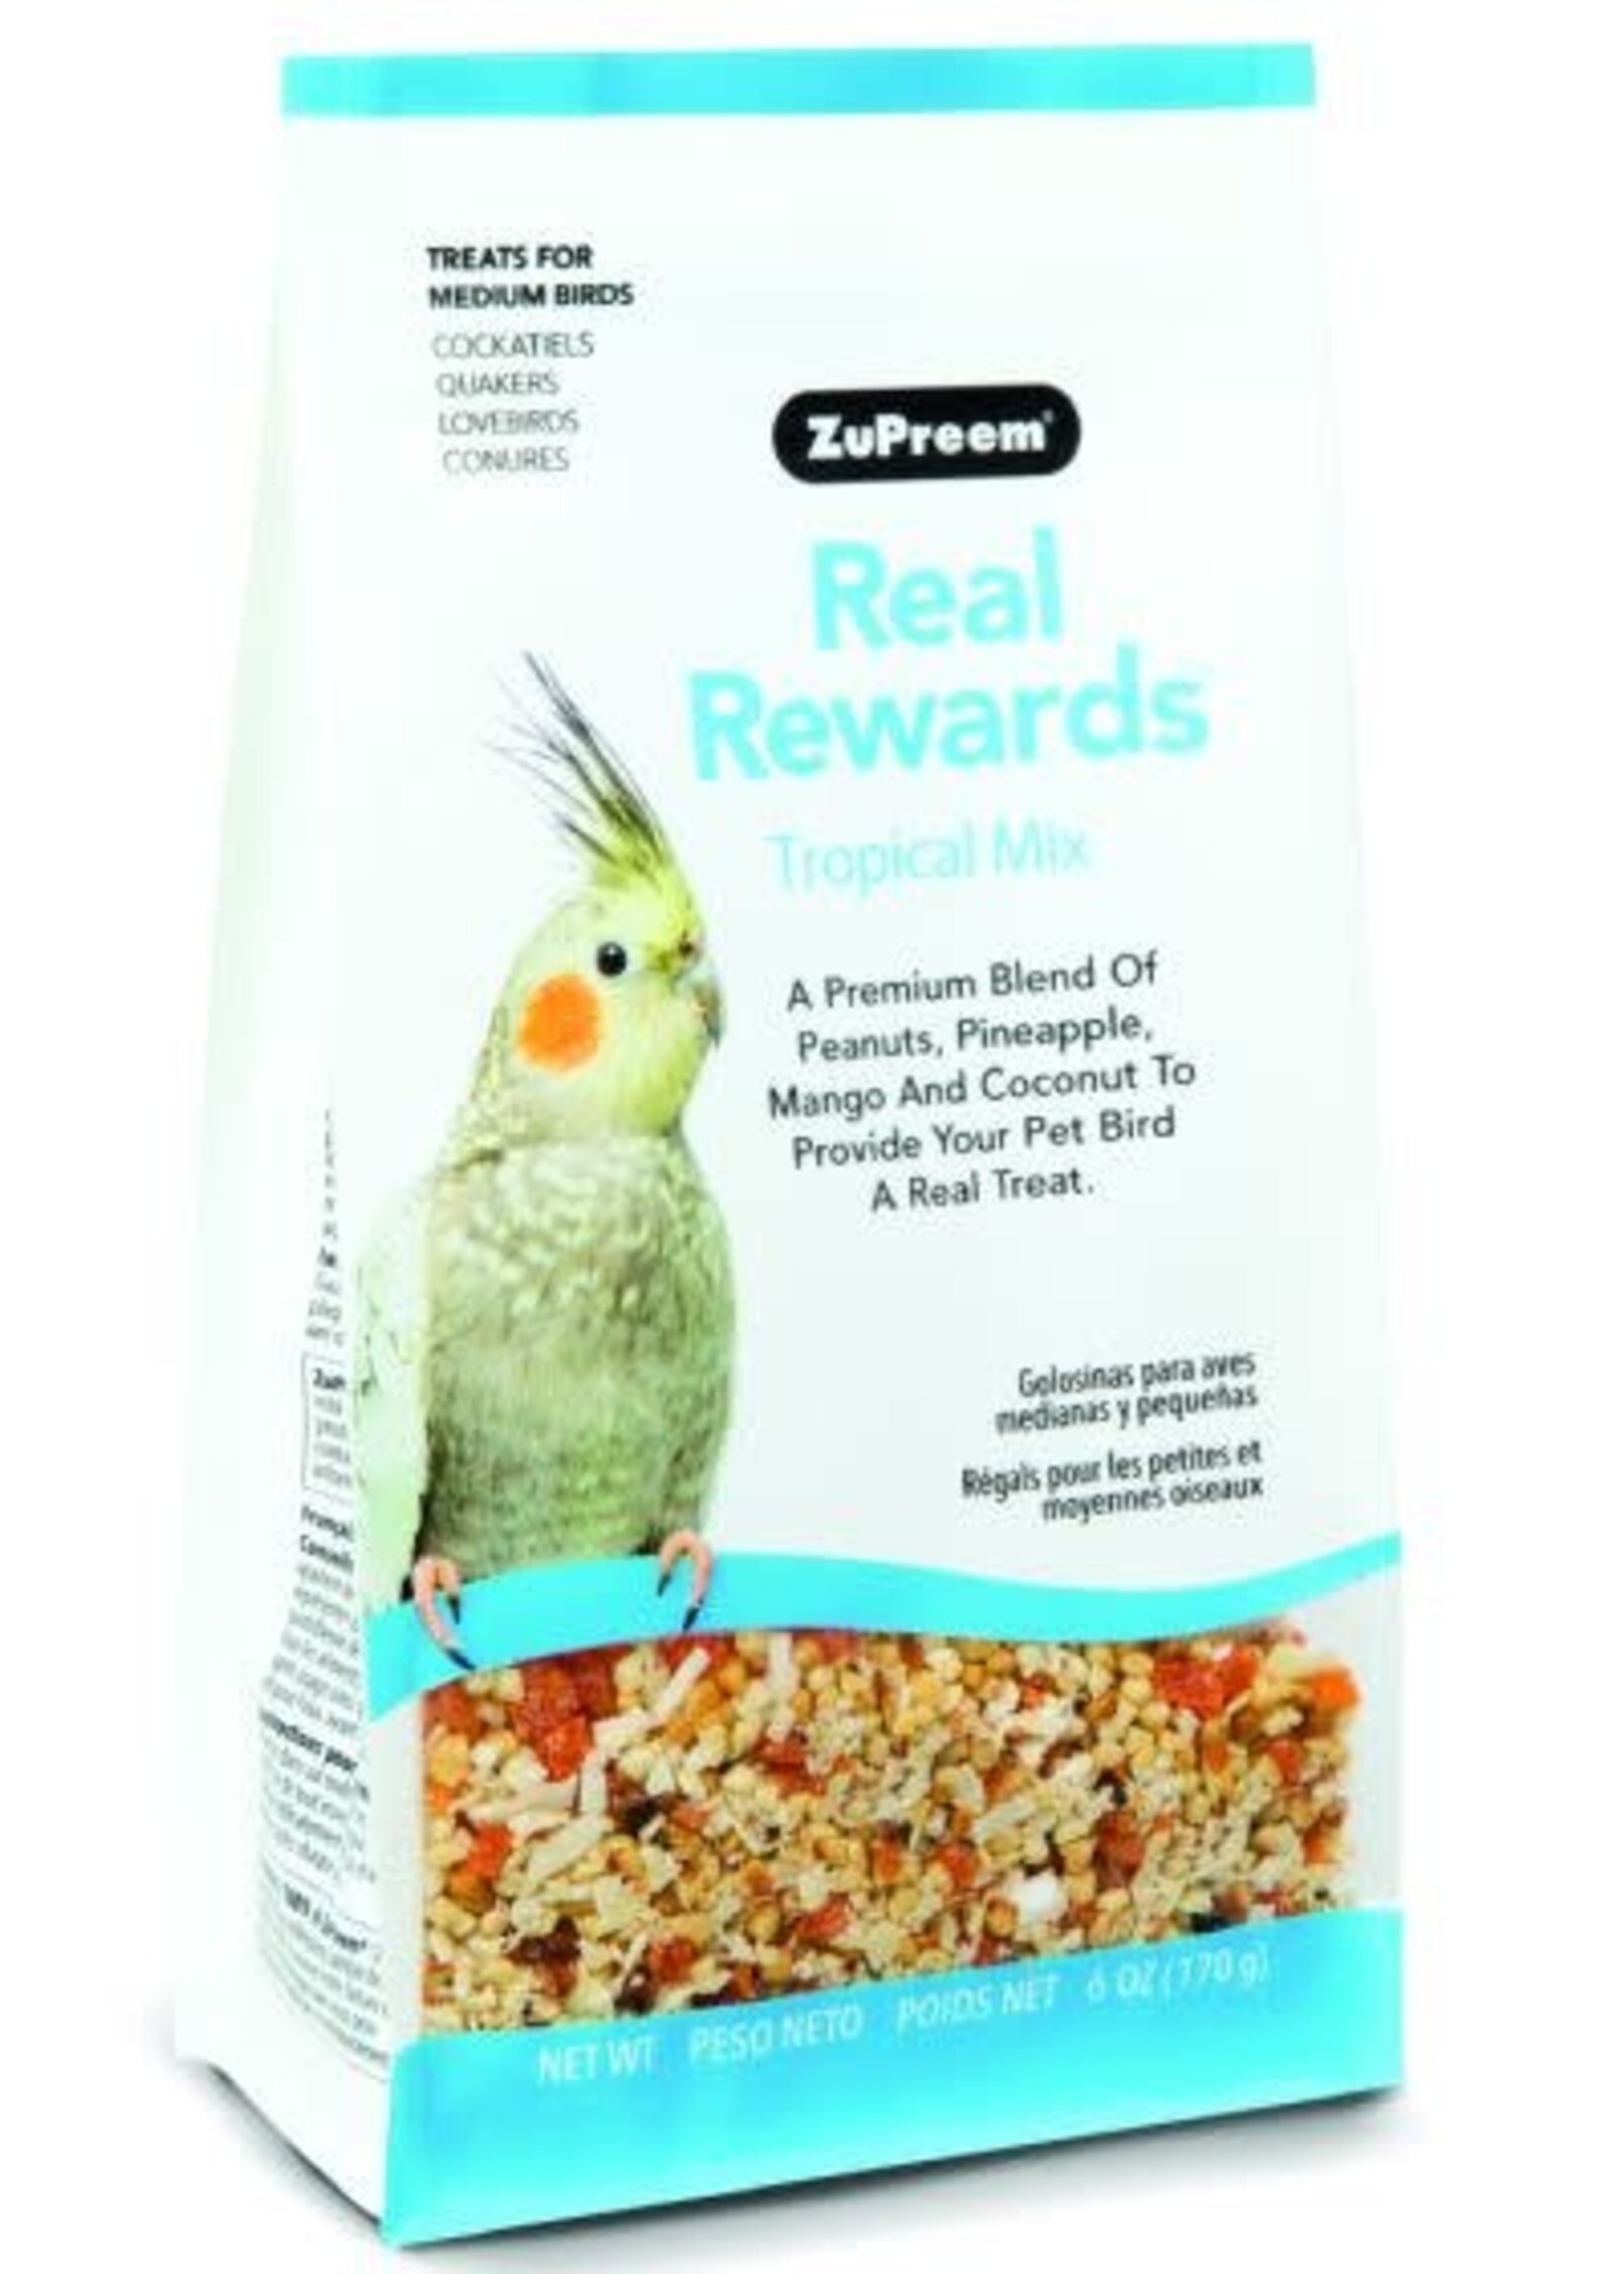 Zupreem ZuPreem "Real Rewards - Tropical Mix" Fruit & Nut Treats For Medium Birds 6oz 49500